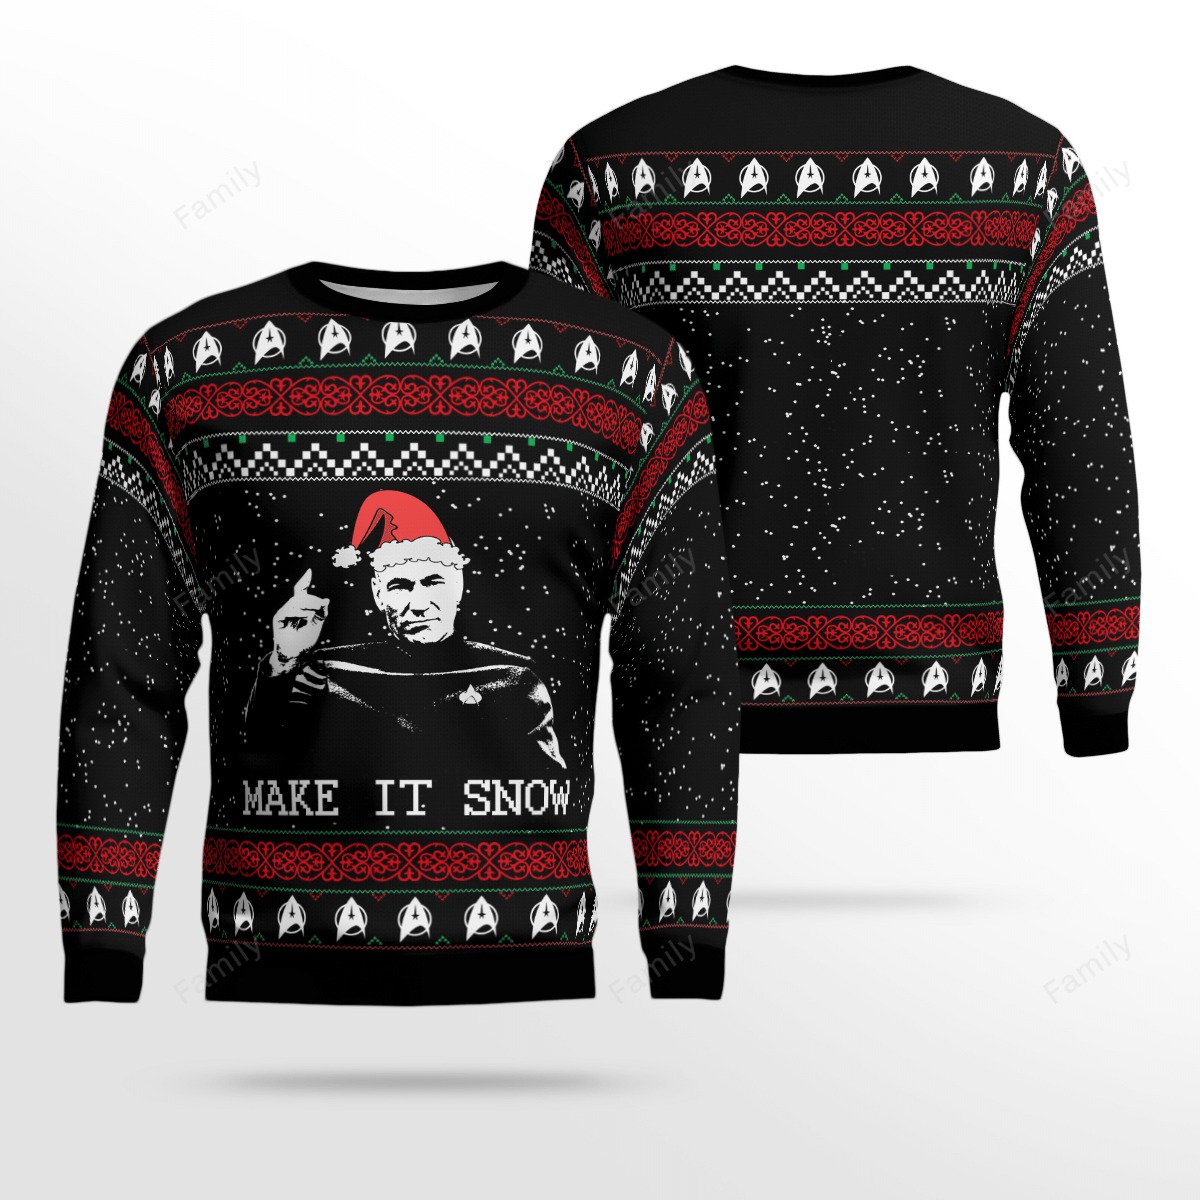 Star Trek Make it snow sweater